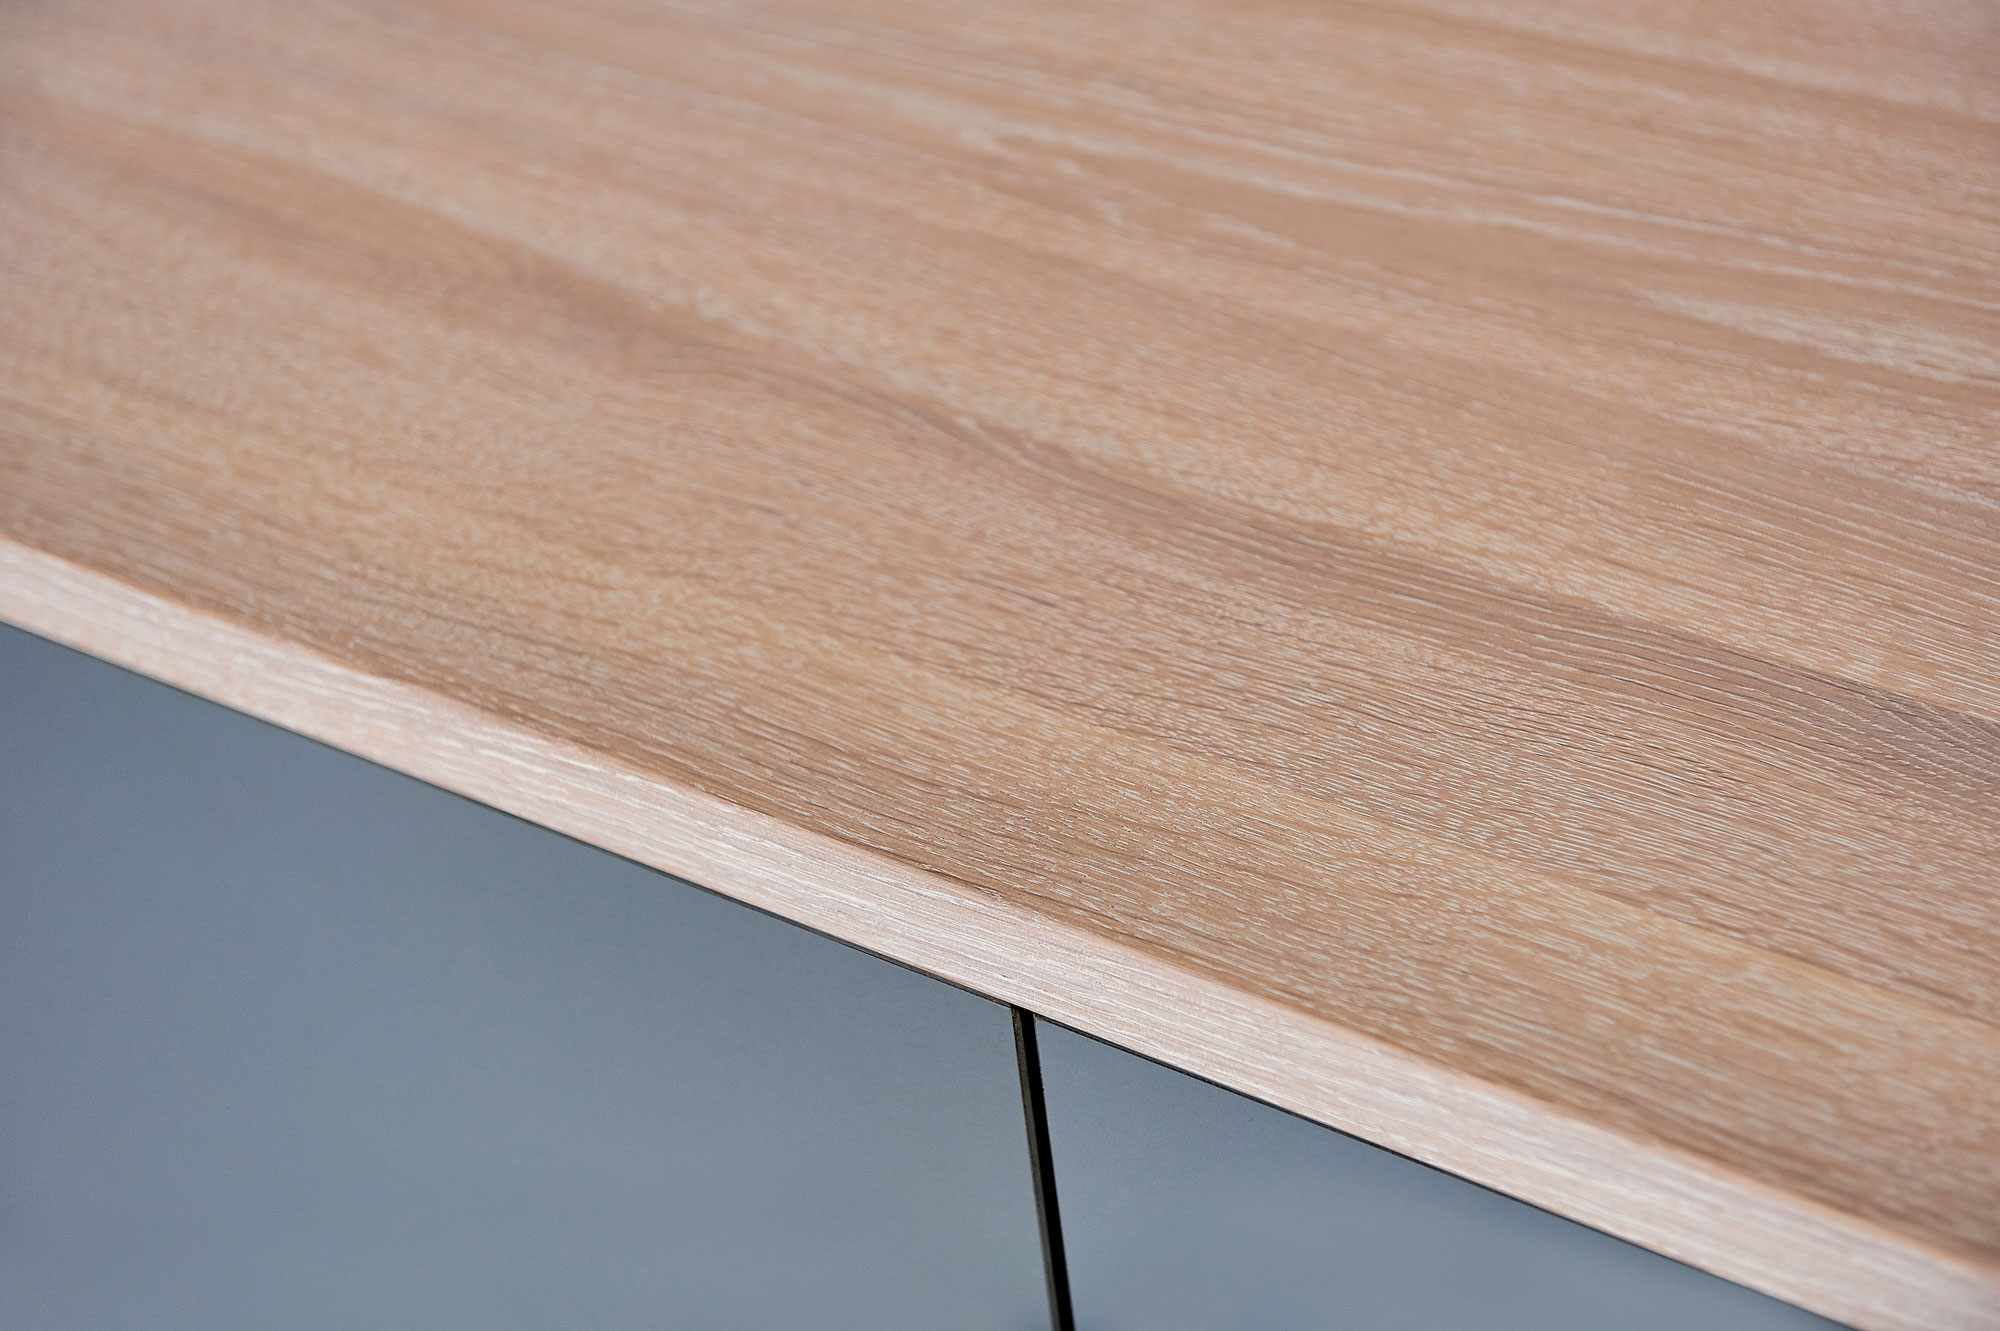 BIO-MDF Wood Sideboard SENA Edited custom made in solid wood by vitamin design